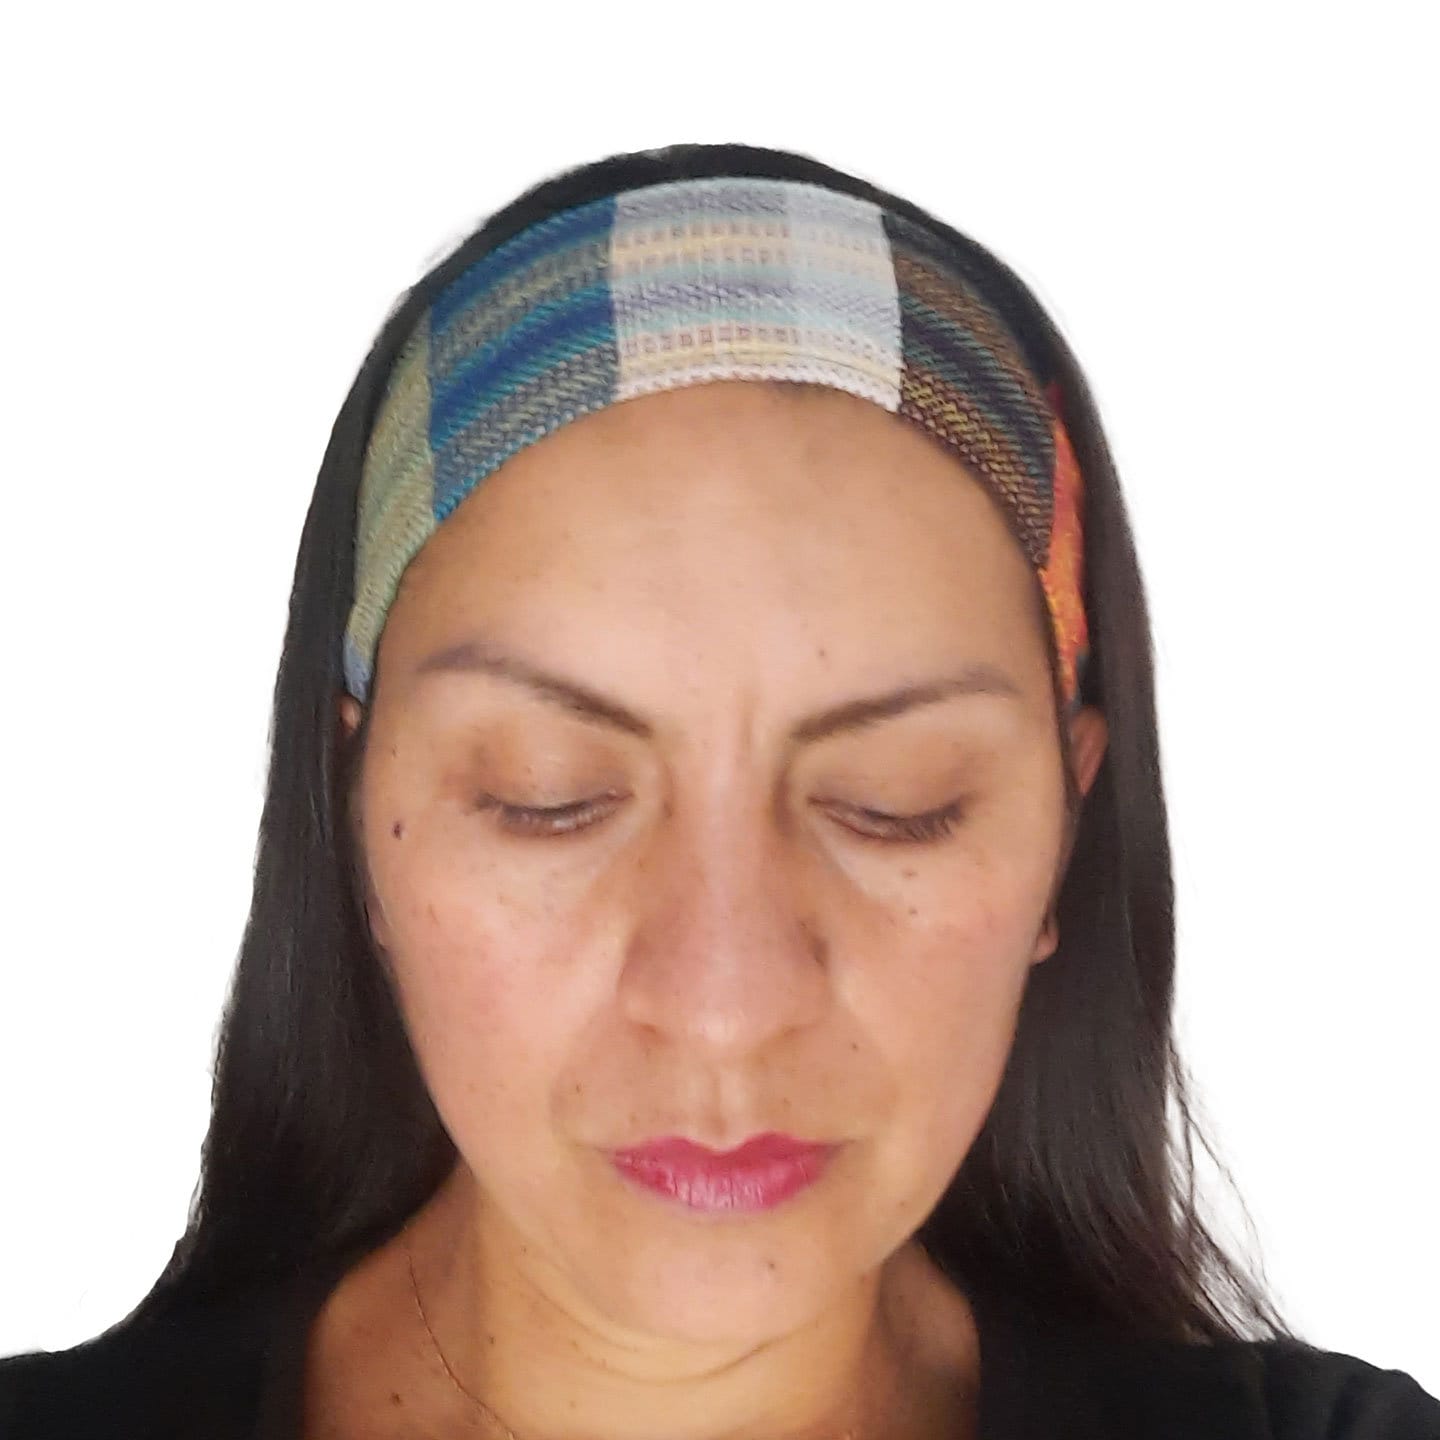 Narrow Skinny Hippie Headband for Men and Women